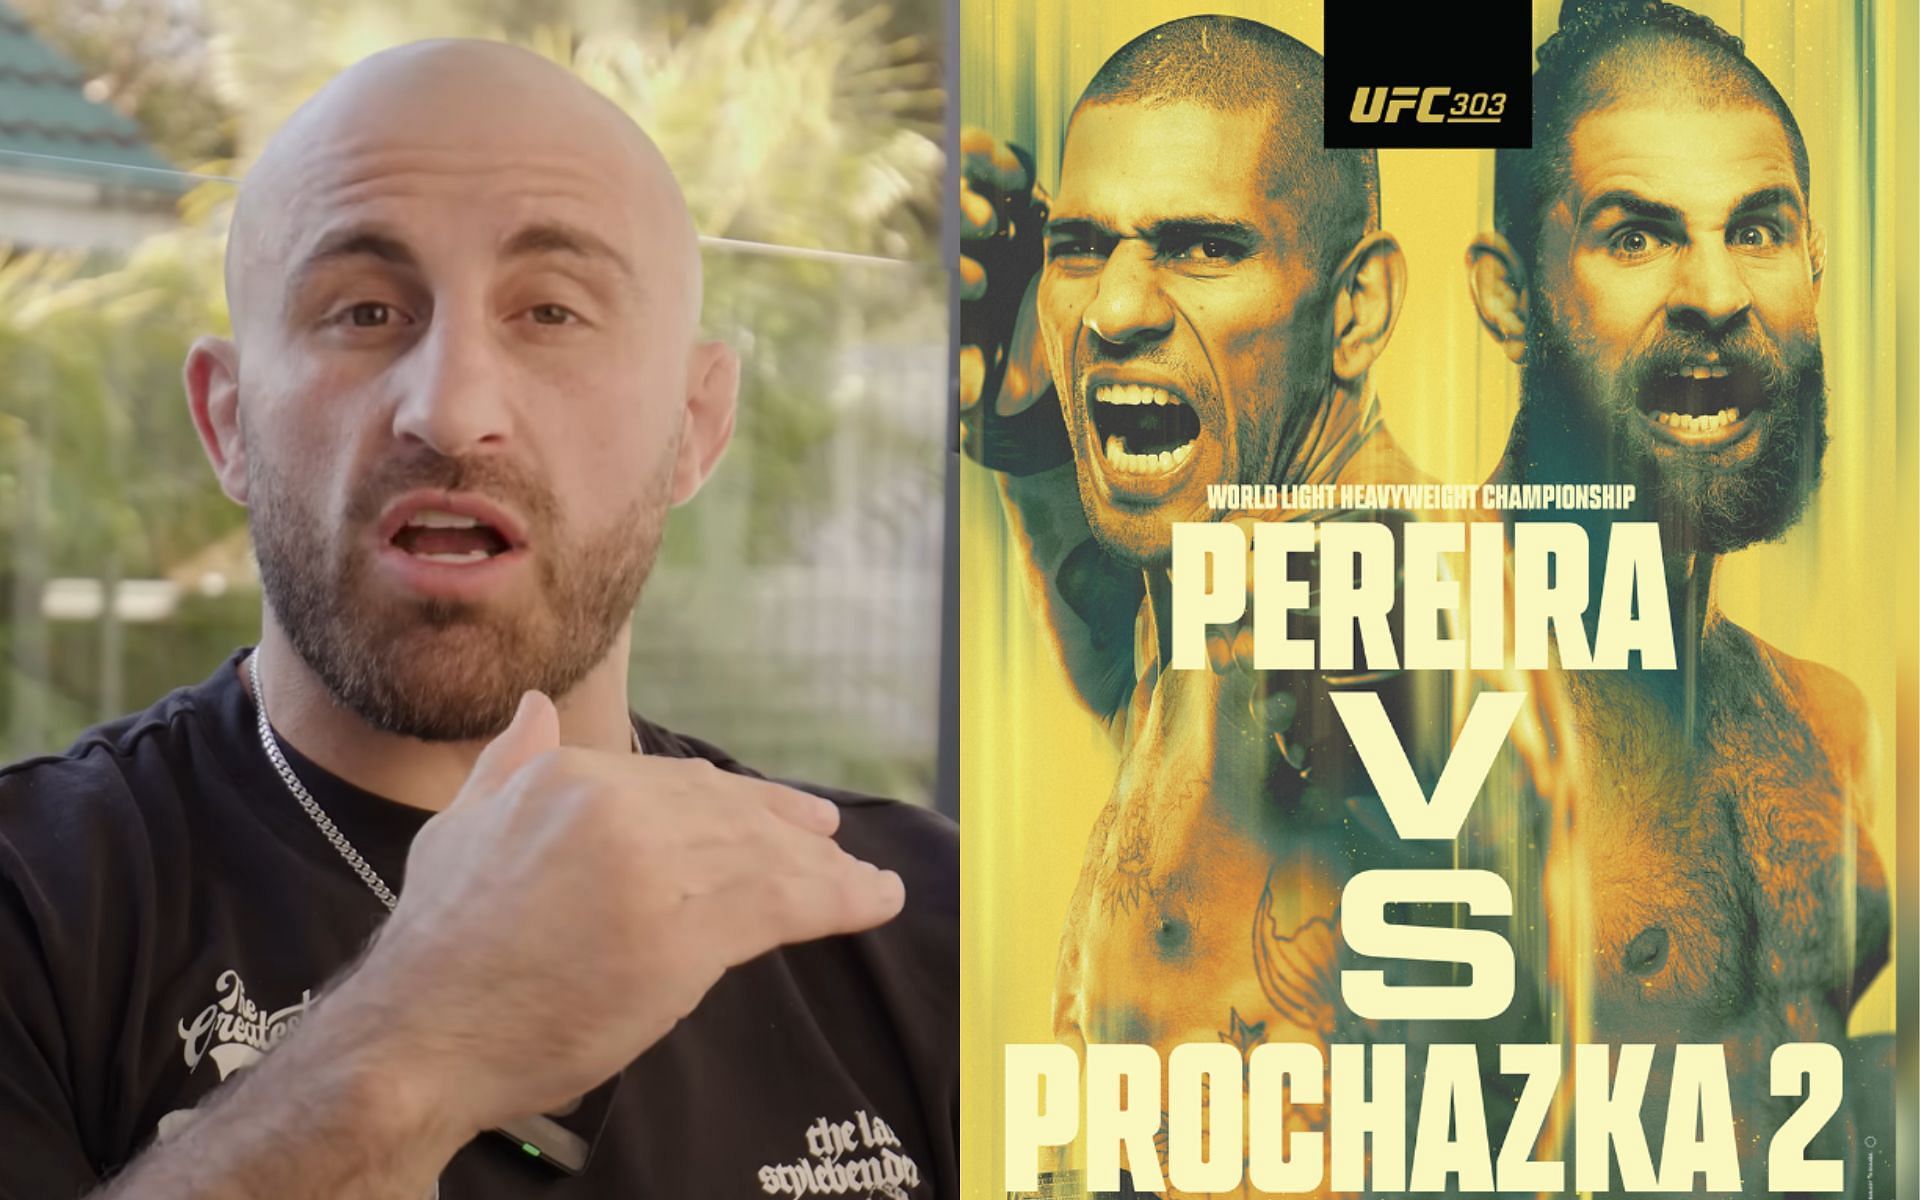 Alexander Volkanovski (left) predicts knockout in Alex Pereira vs. Jiri Prochazka set for UFC 303 (right) [Images courtesy: @alexandervolkanovski on YouTube and @ufc on Instagram]